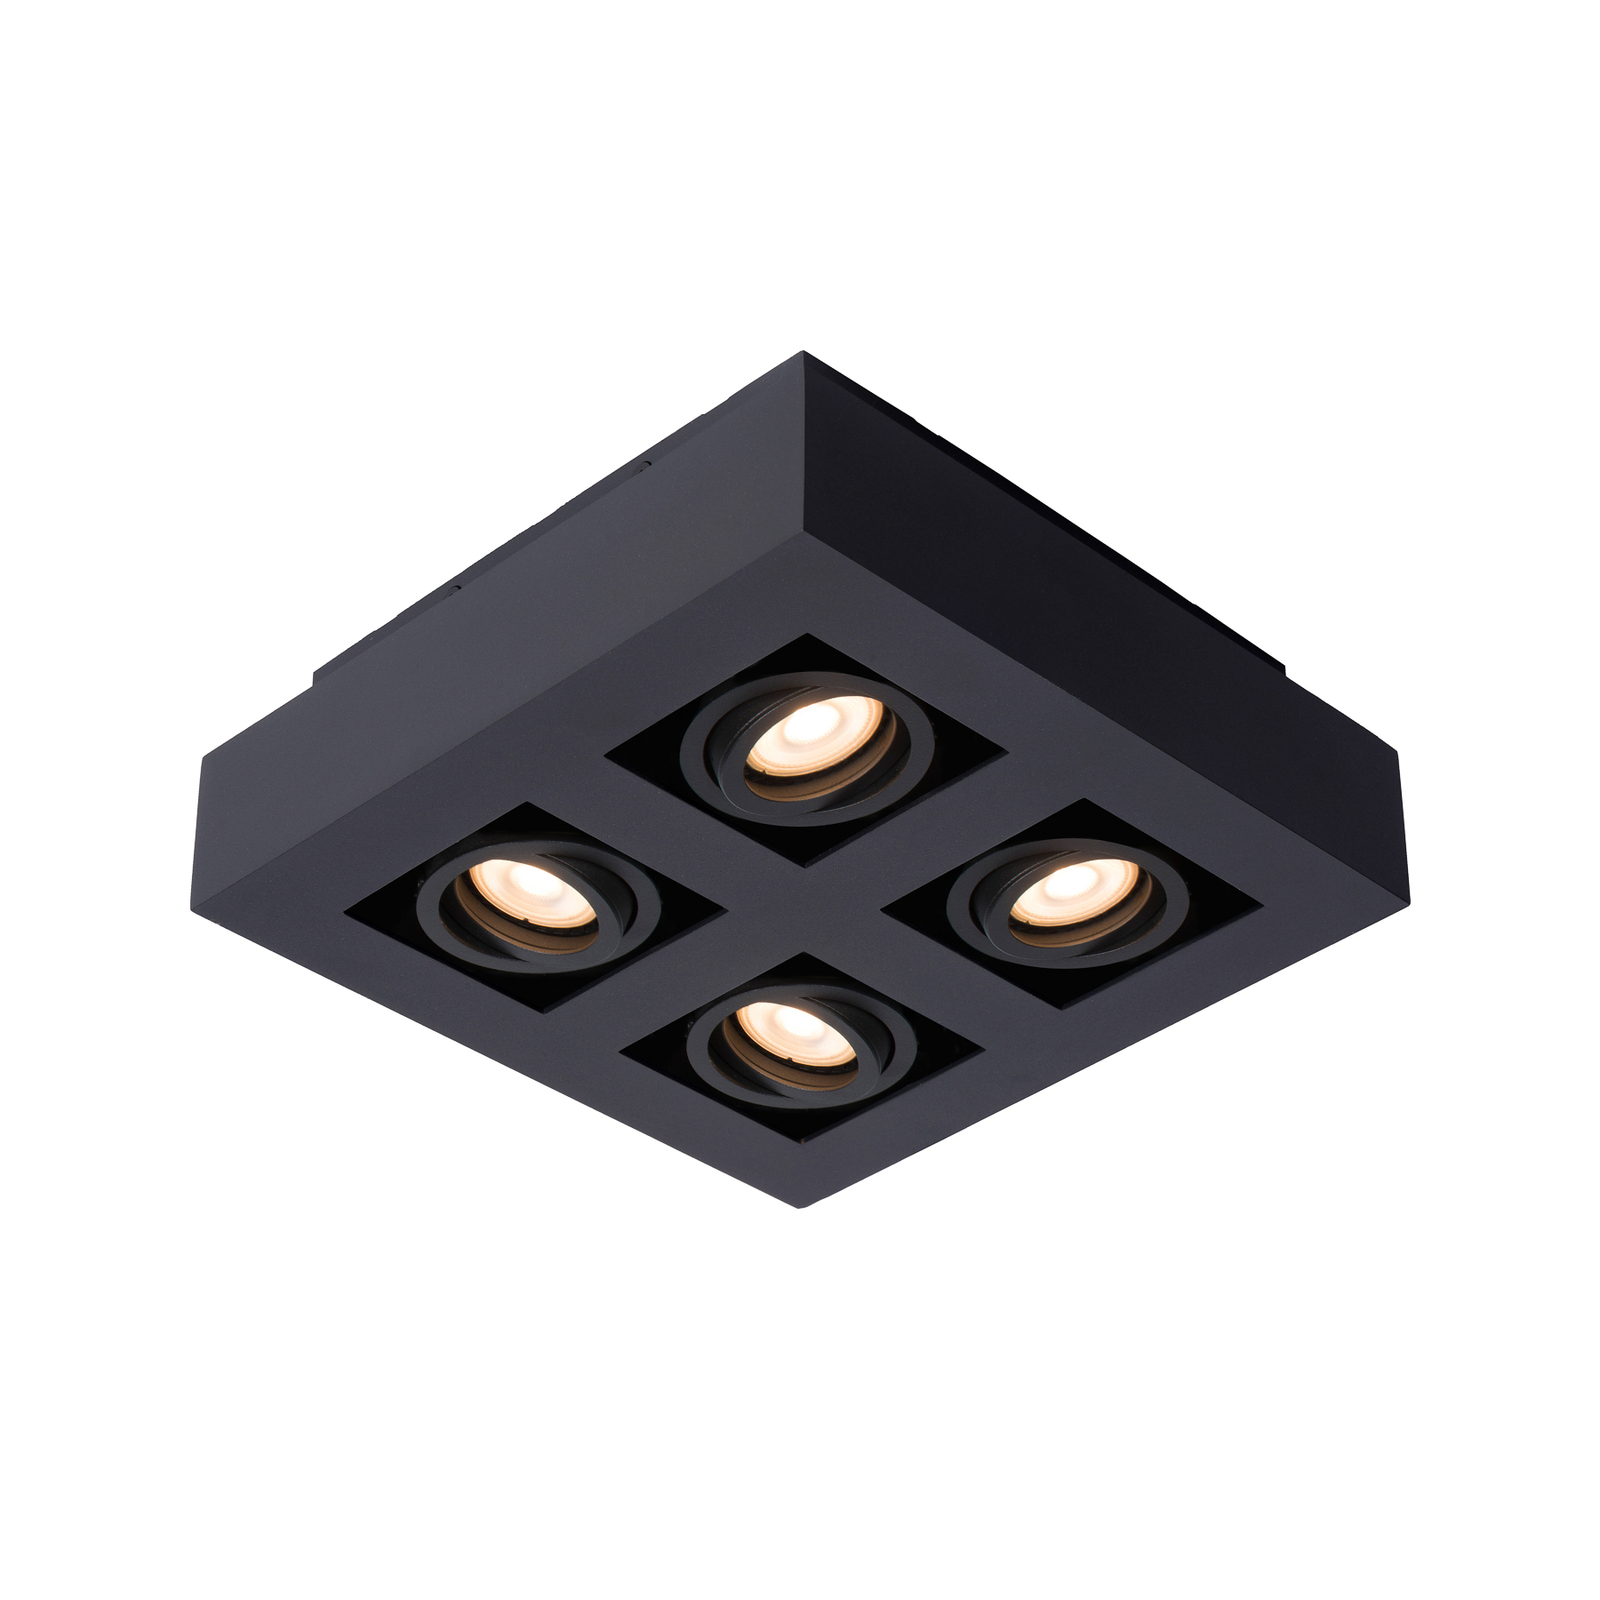 Xirax downlight, 4-bulb, black